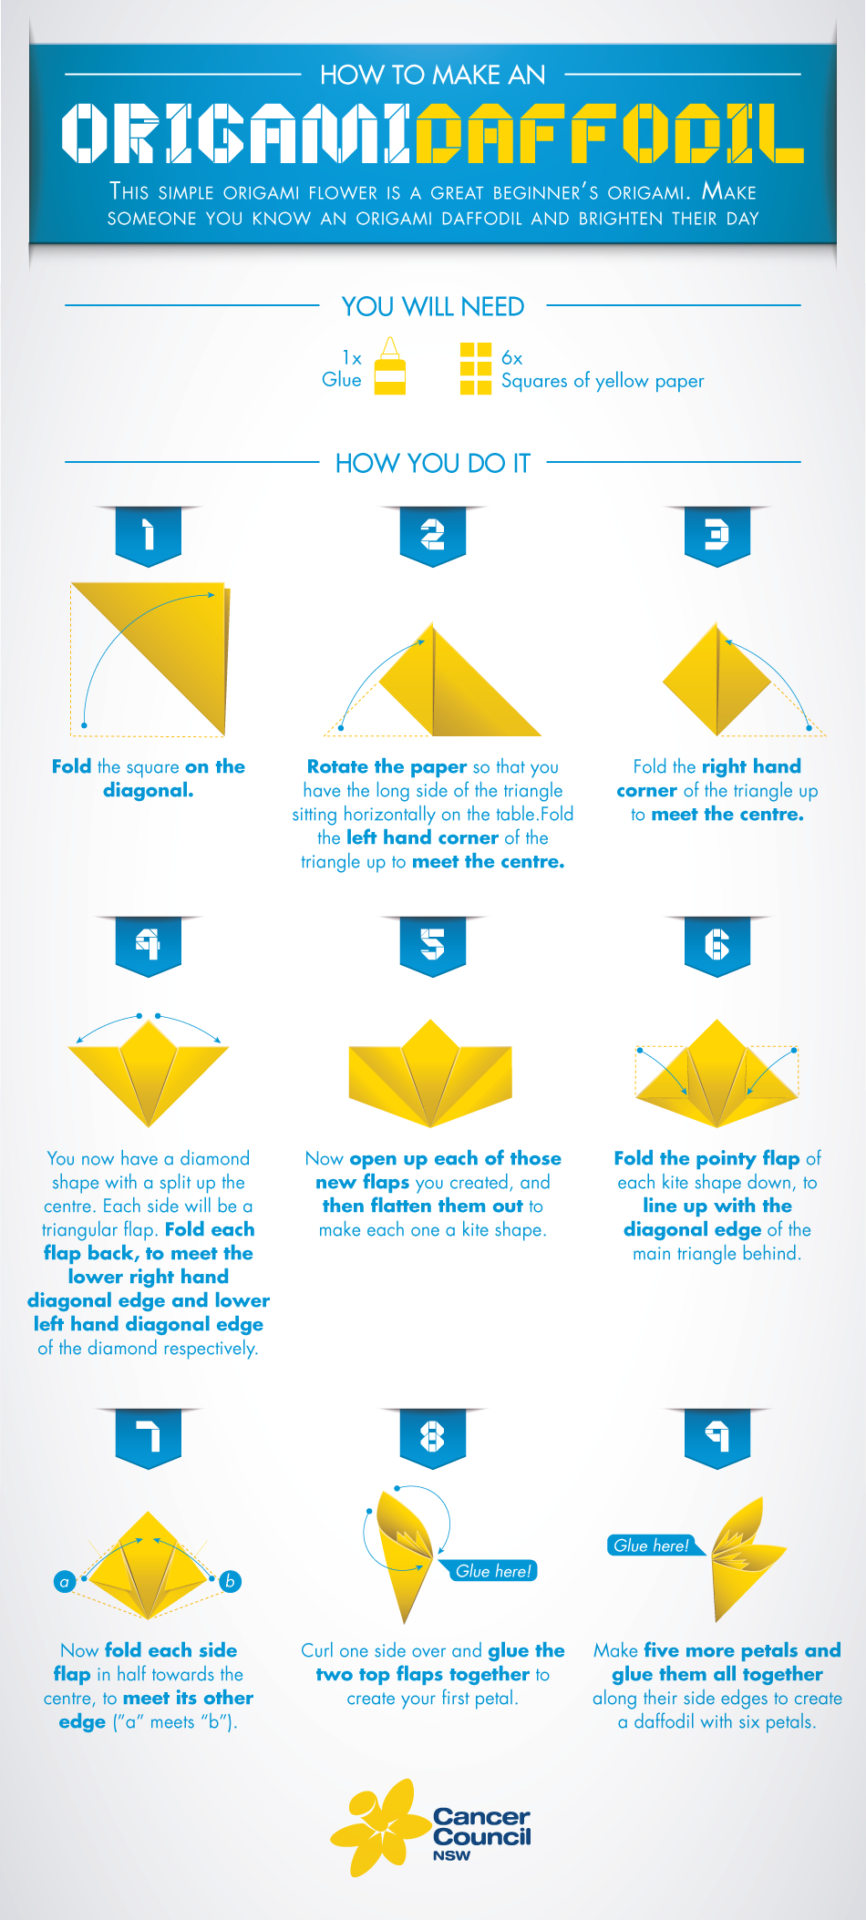 Origami daffodil instructions